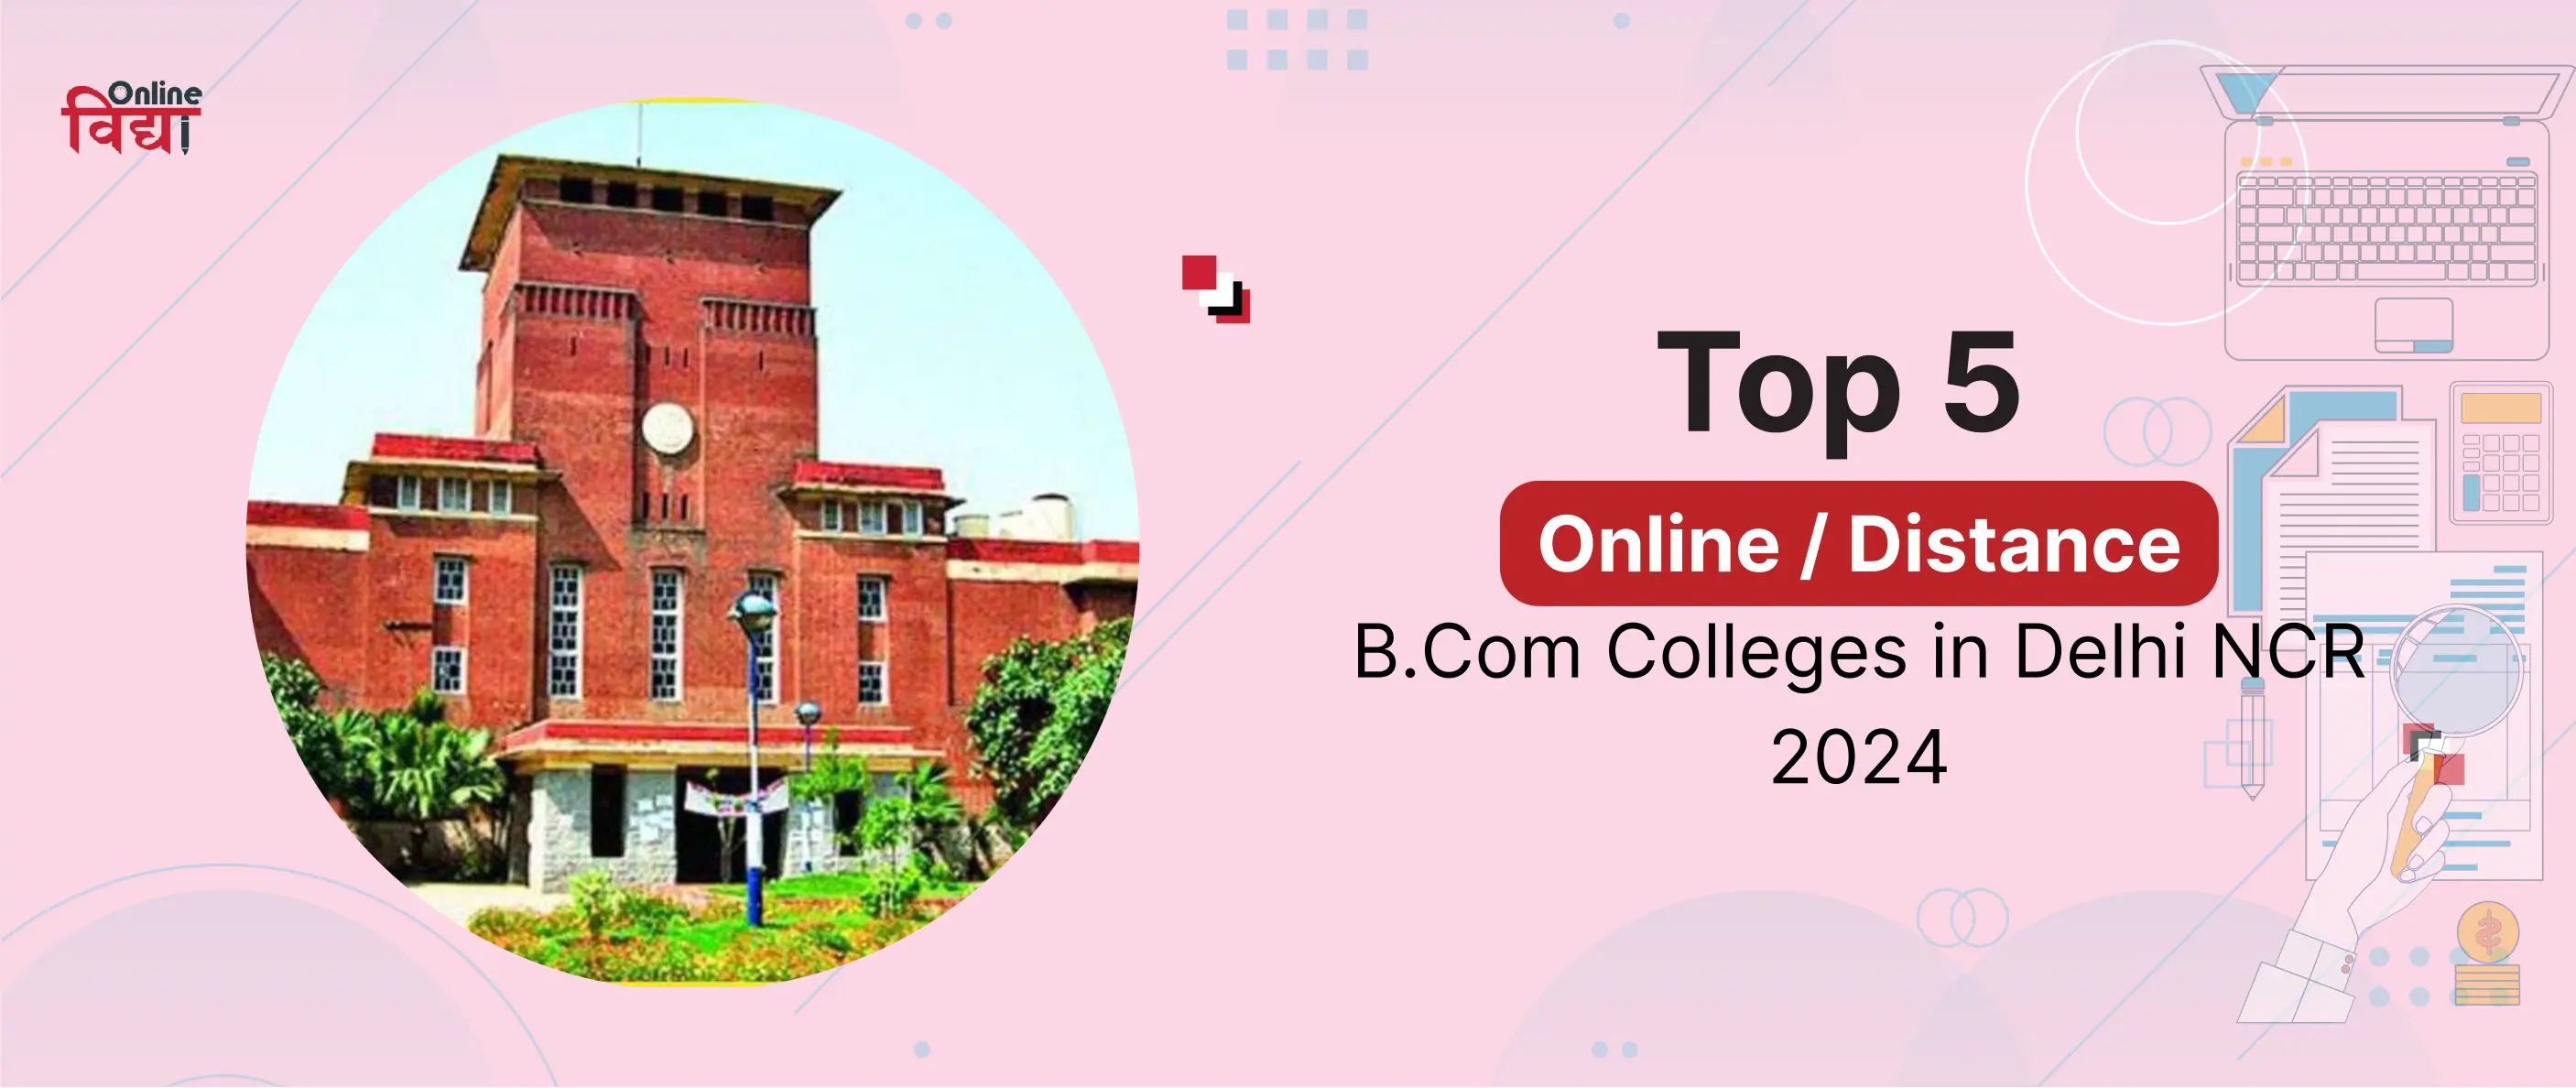 Top 5 Online/ Distance B.Com Colleges in Delhi NCR 2024